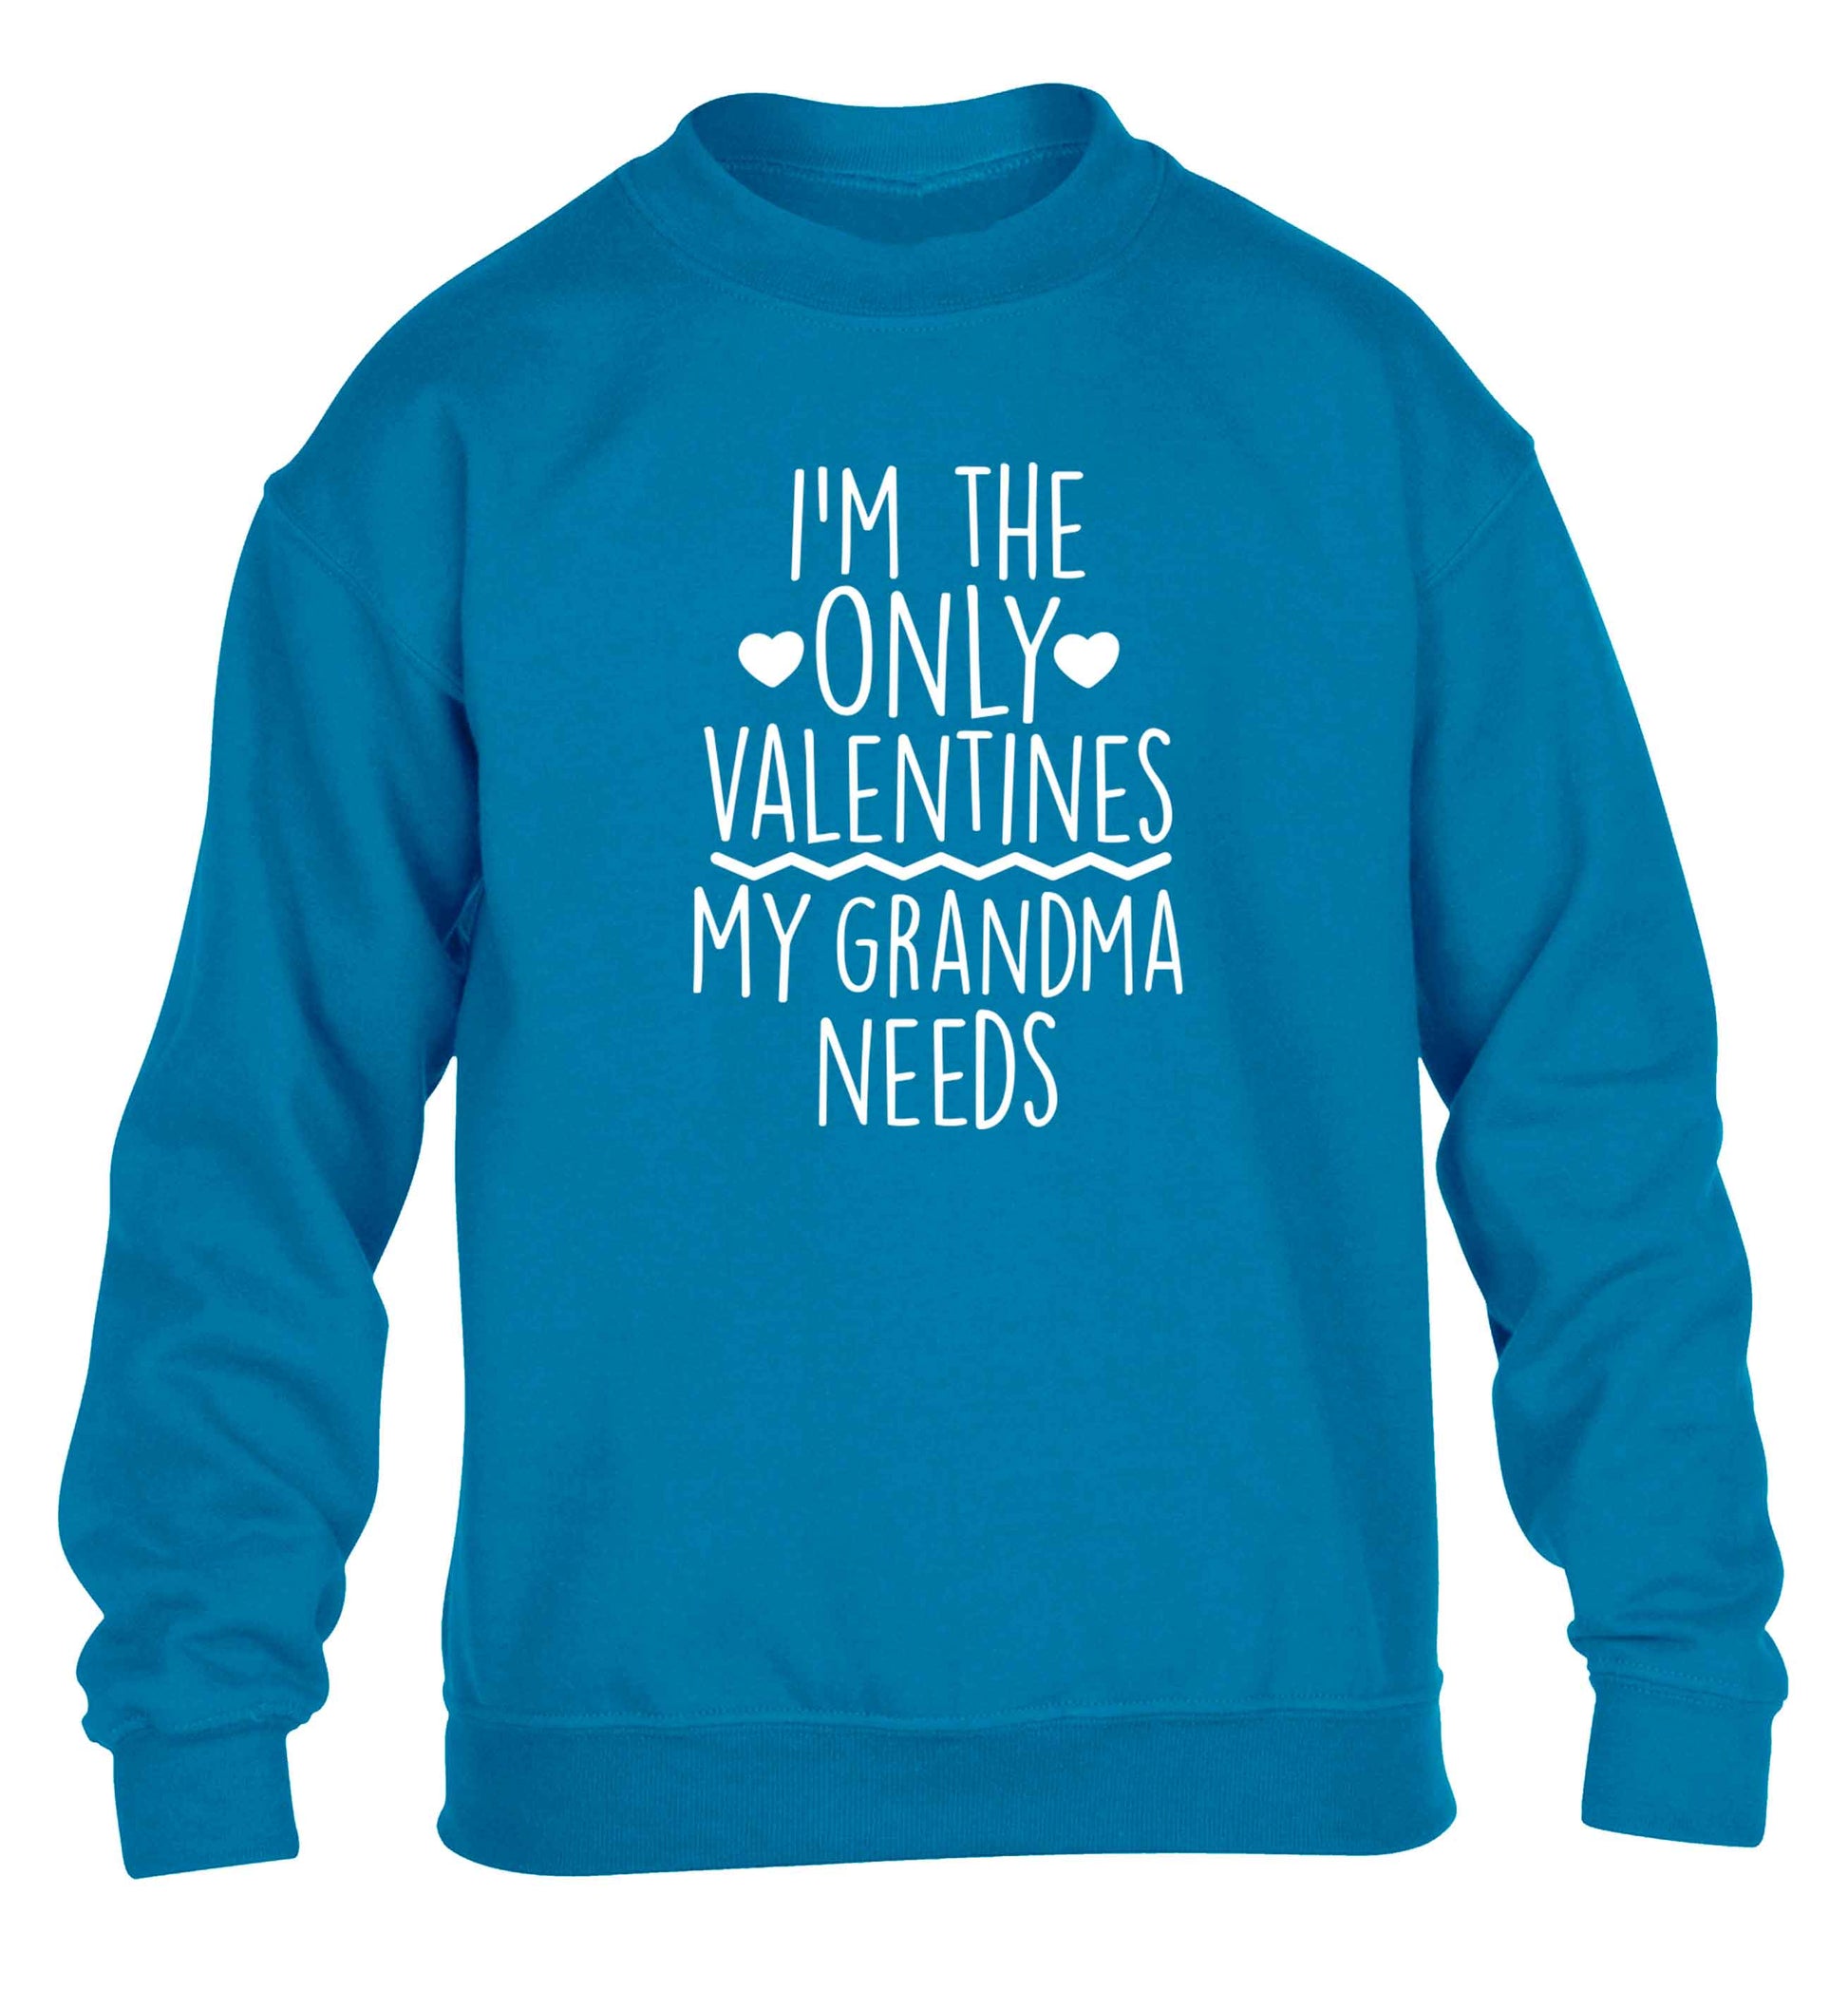 I'm the only valentines my grandma needs children's blue sweater 12-13 Years